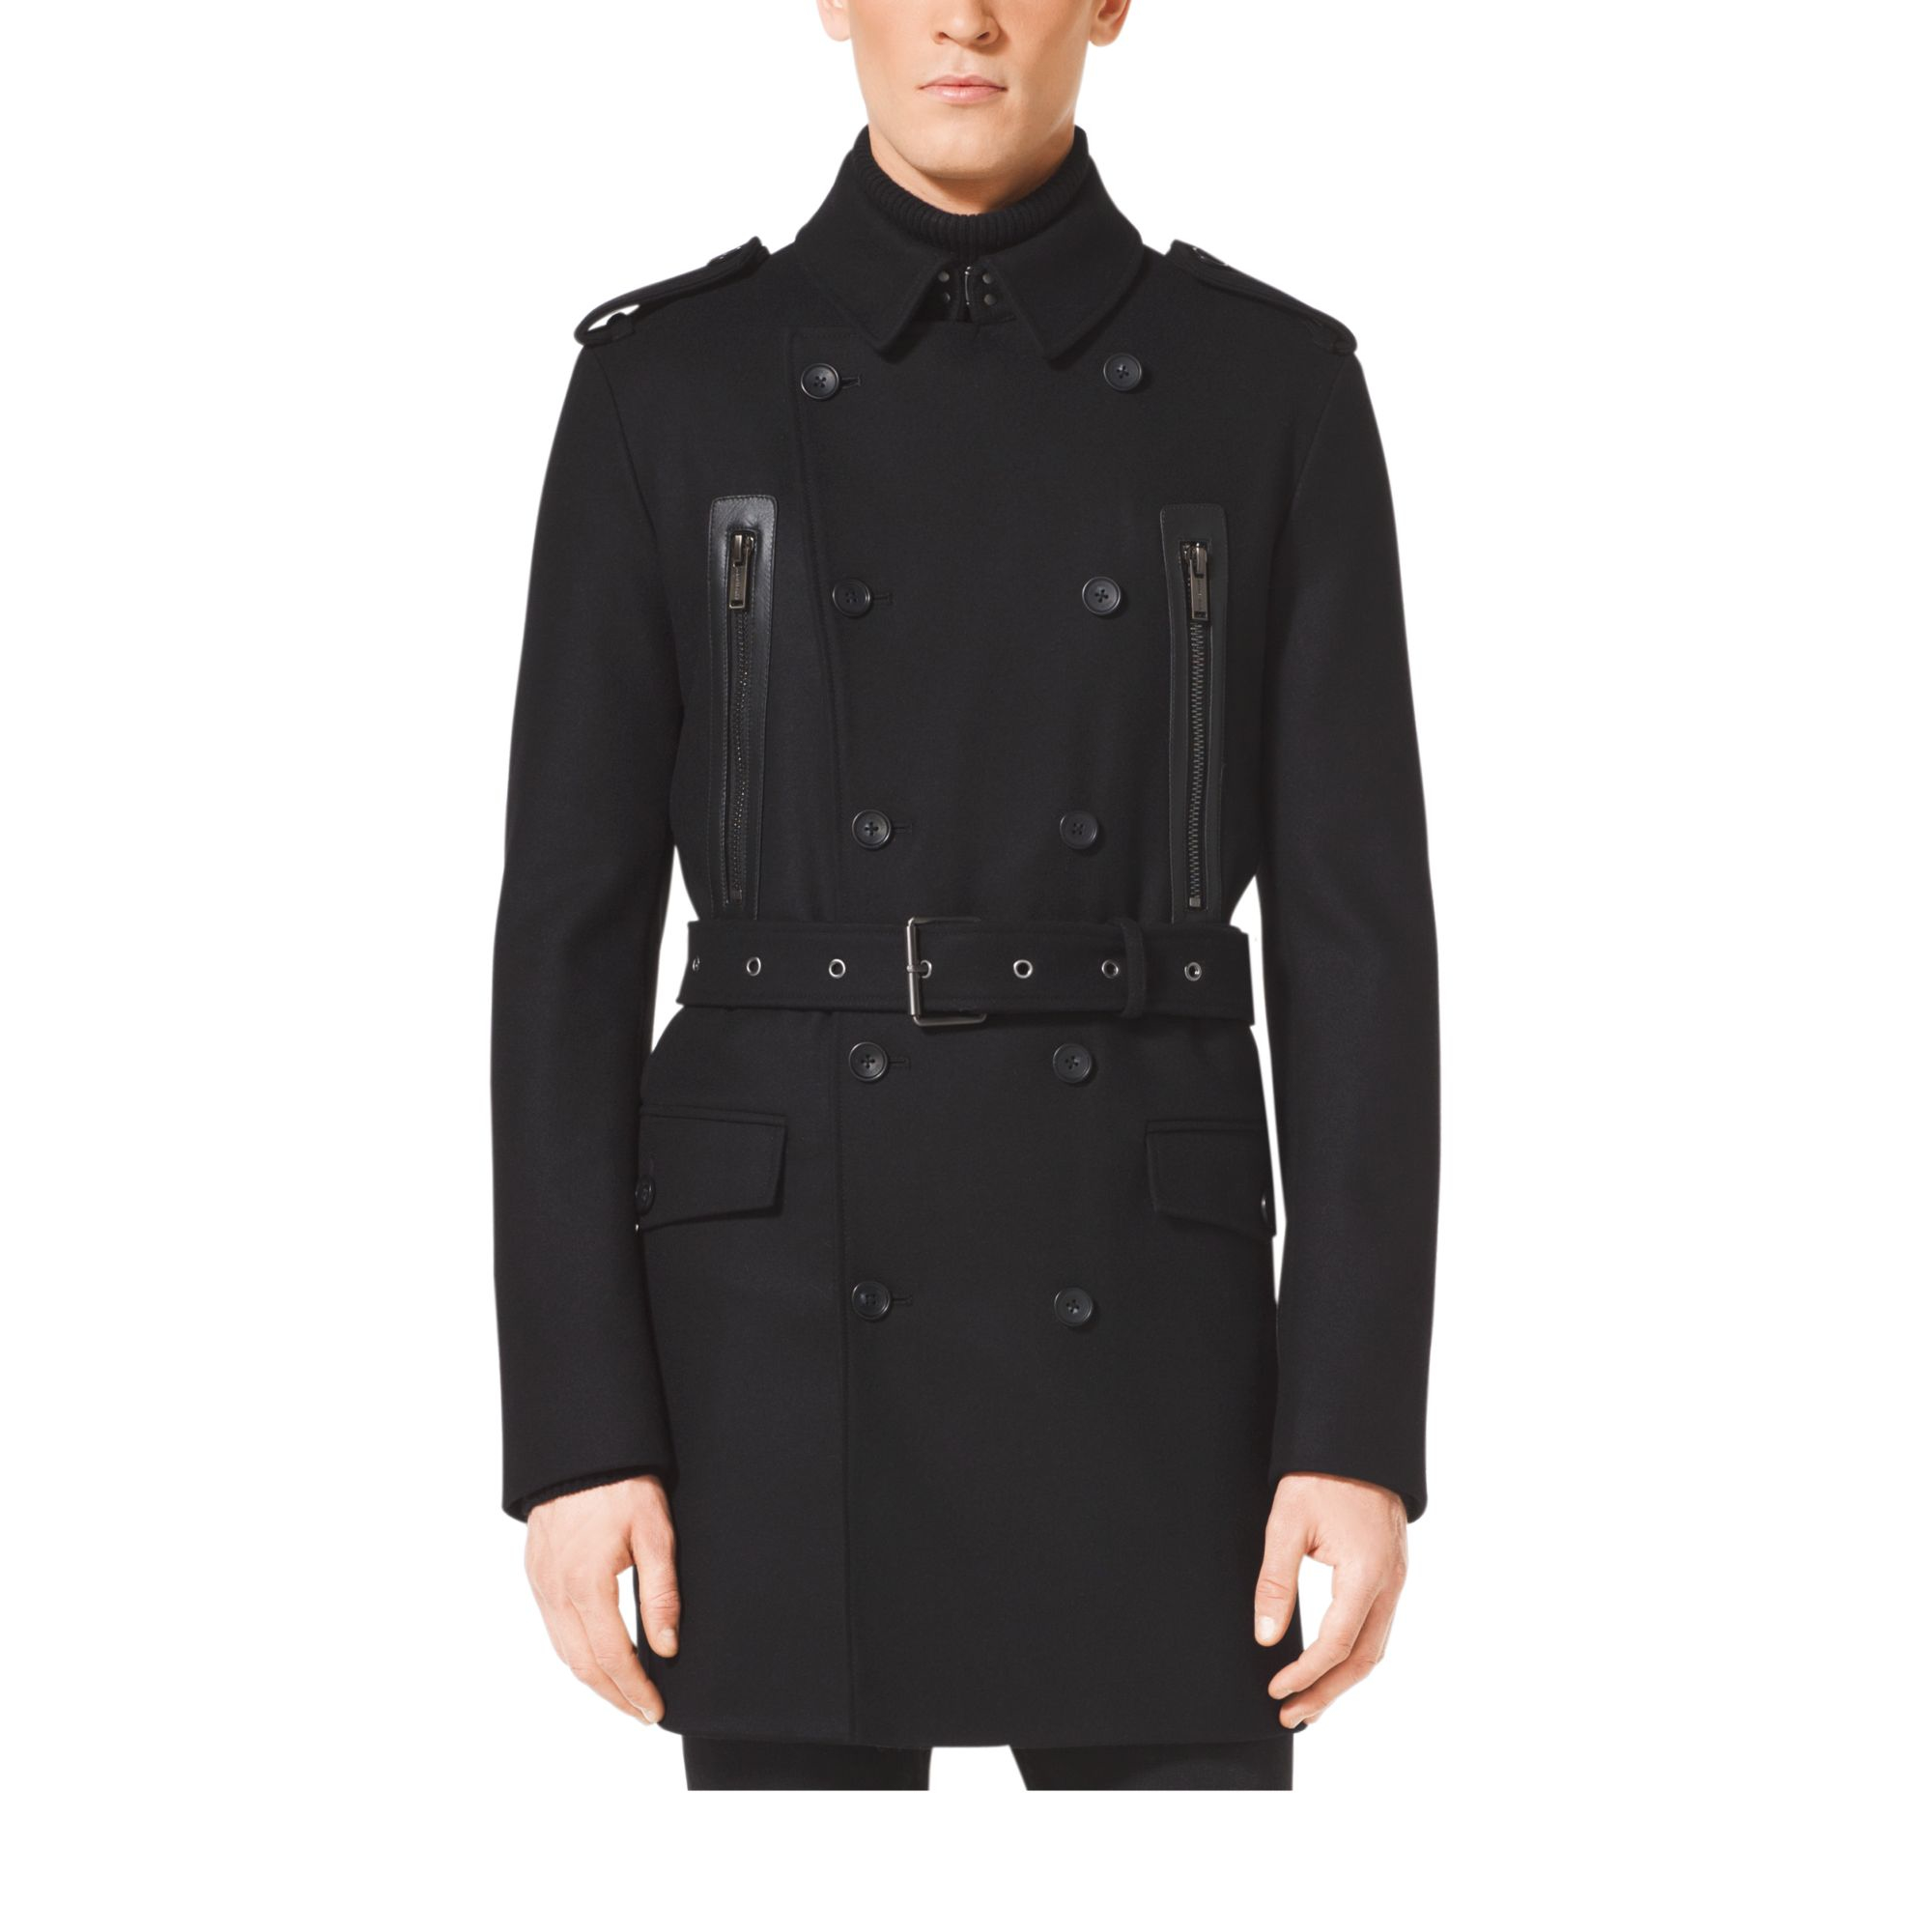 Lyst - Michael Kors Wool Melton Admiral Trench Coat in Black for Men